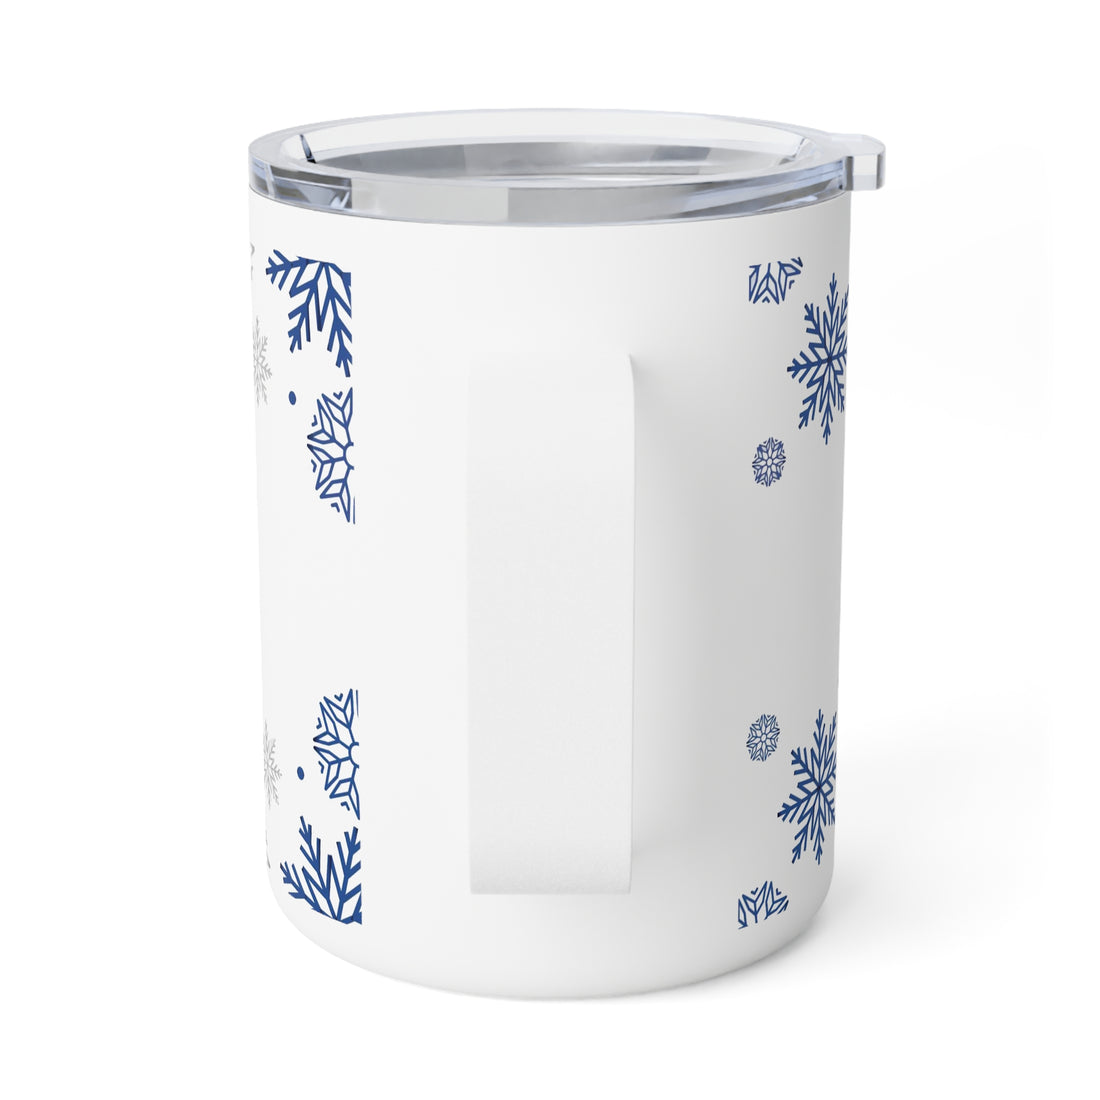 Festivasl Insulated Coffee Mug, 10oz, Season's Greetings